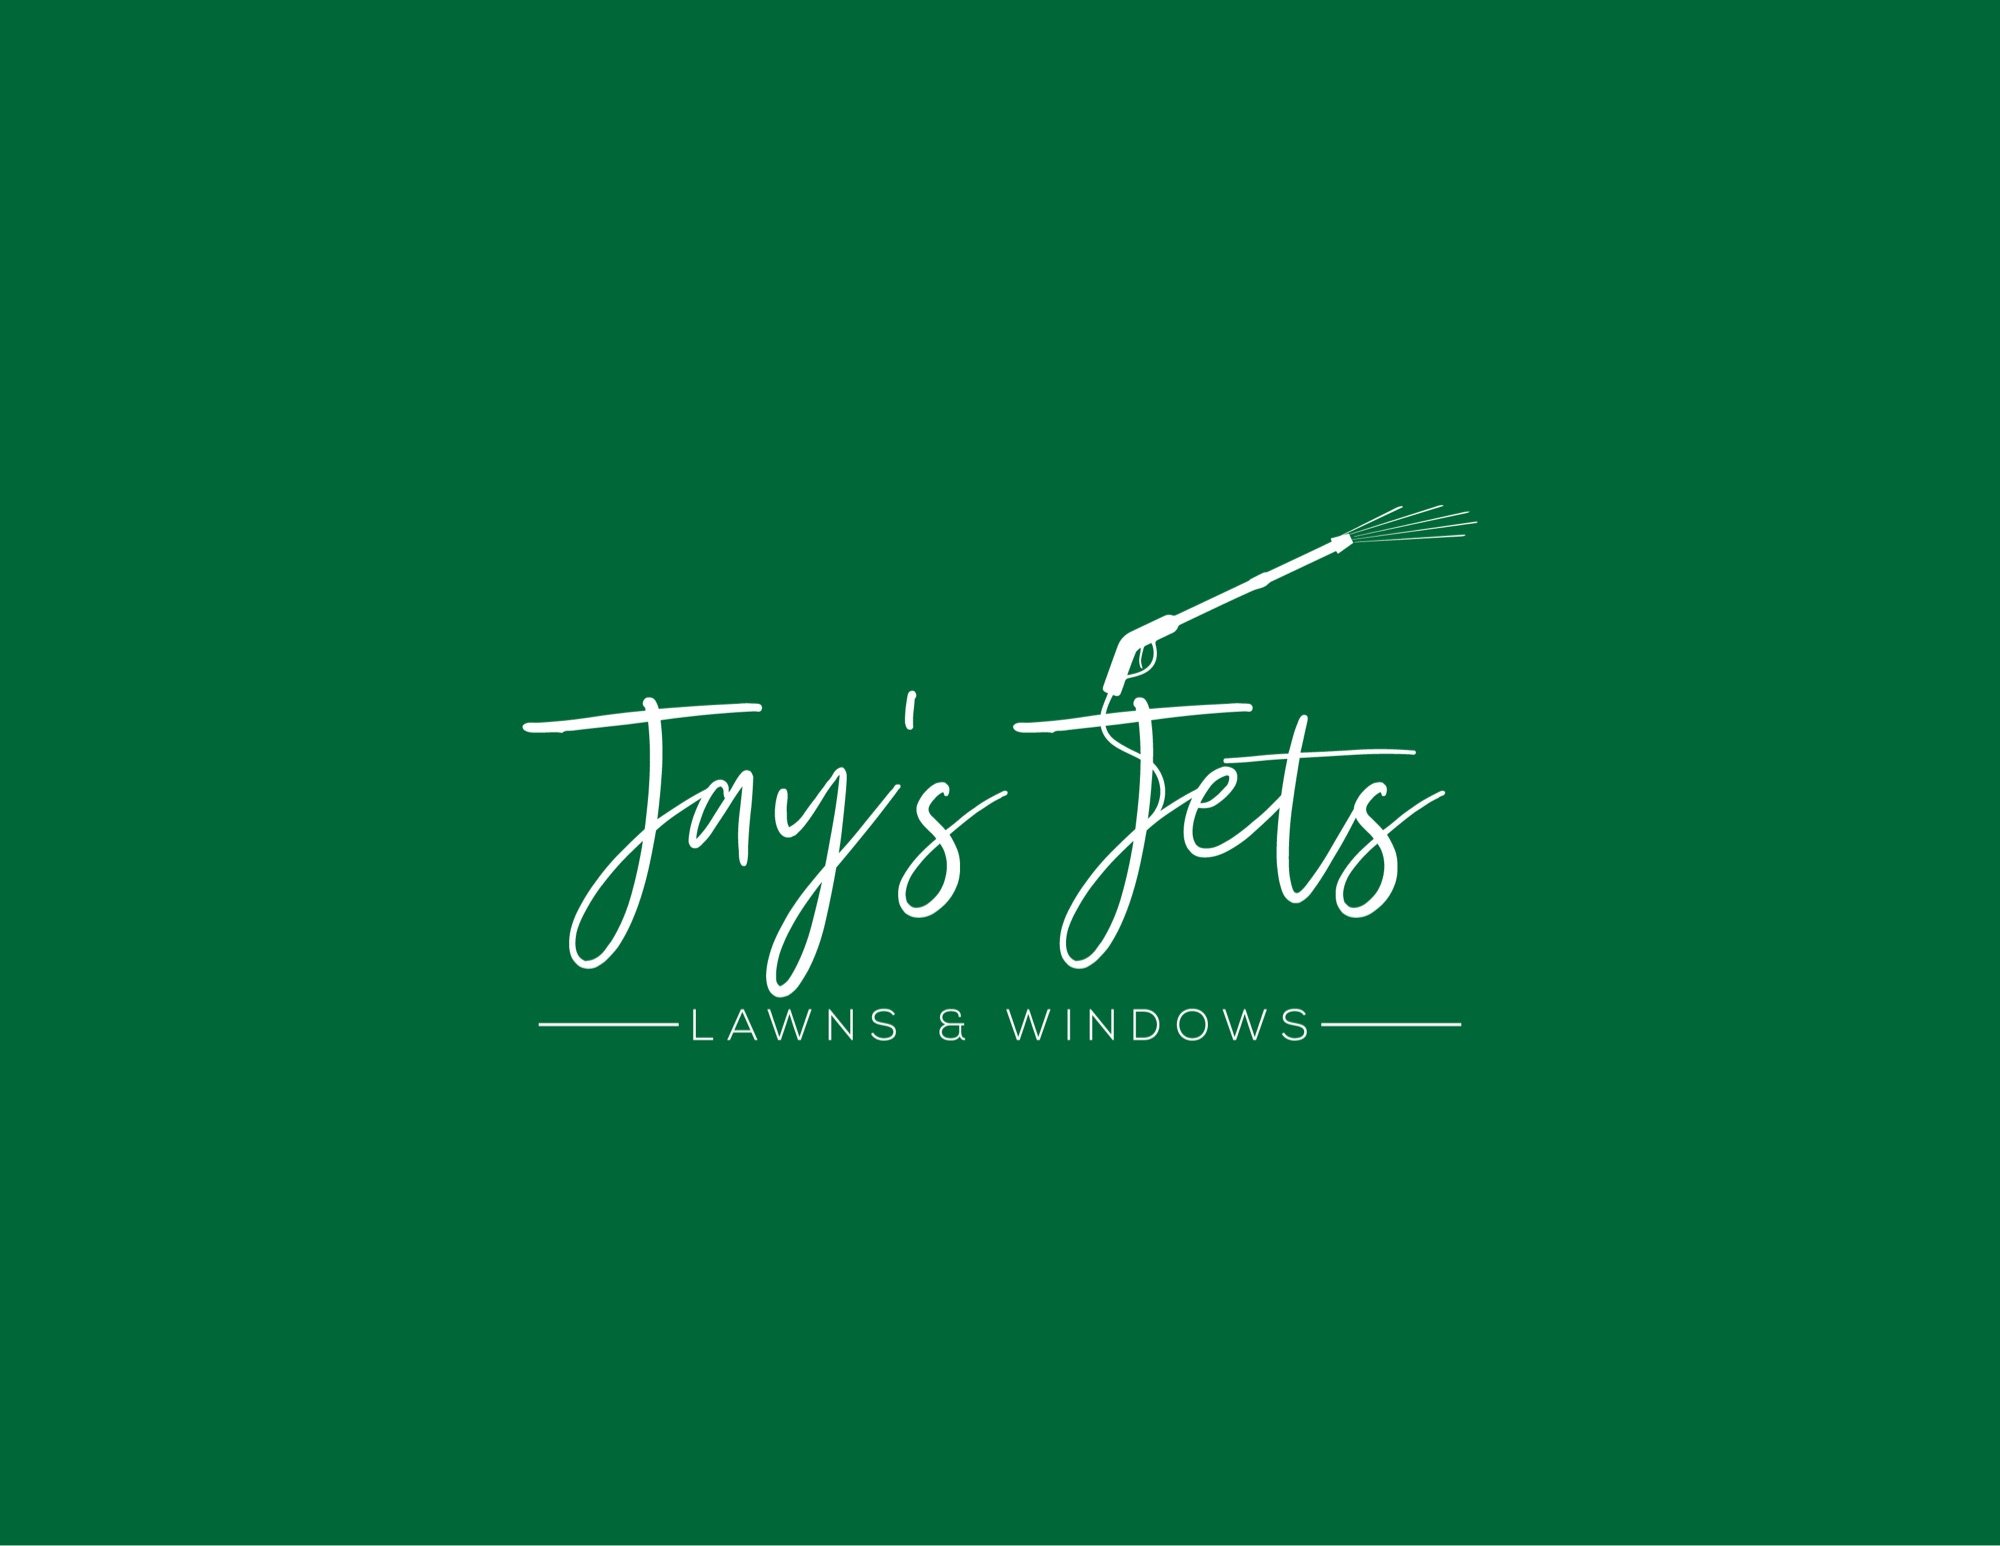 Jay's Jets Lawns & Windows Logo